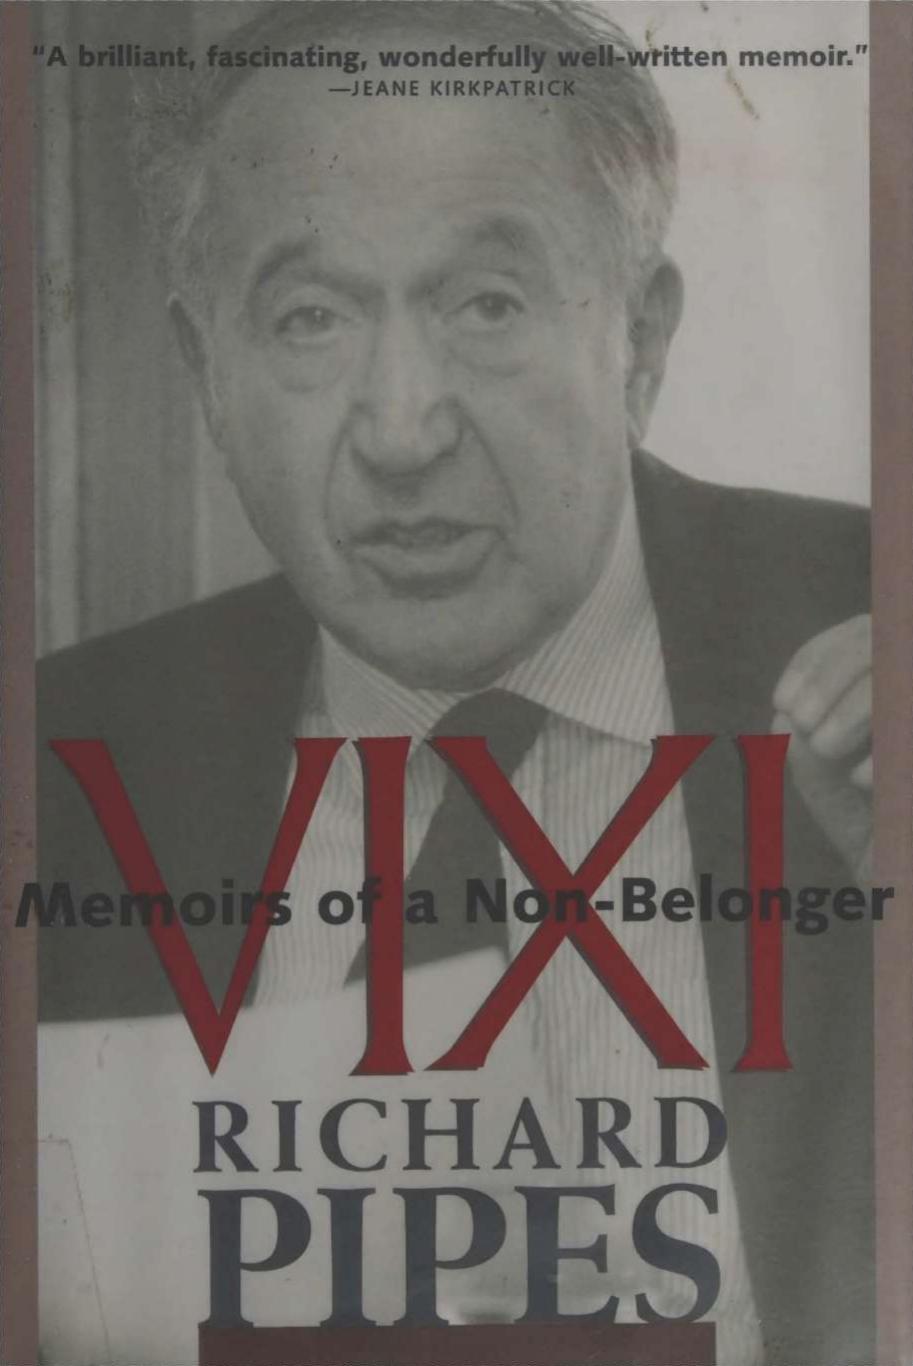 Vixi - Memoirs of Non-Belonger by Richard Pipes